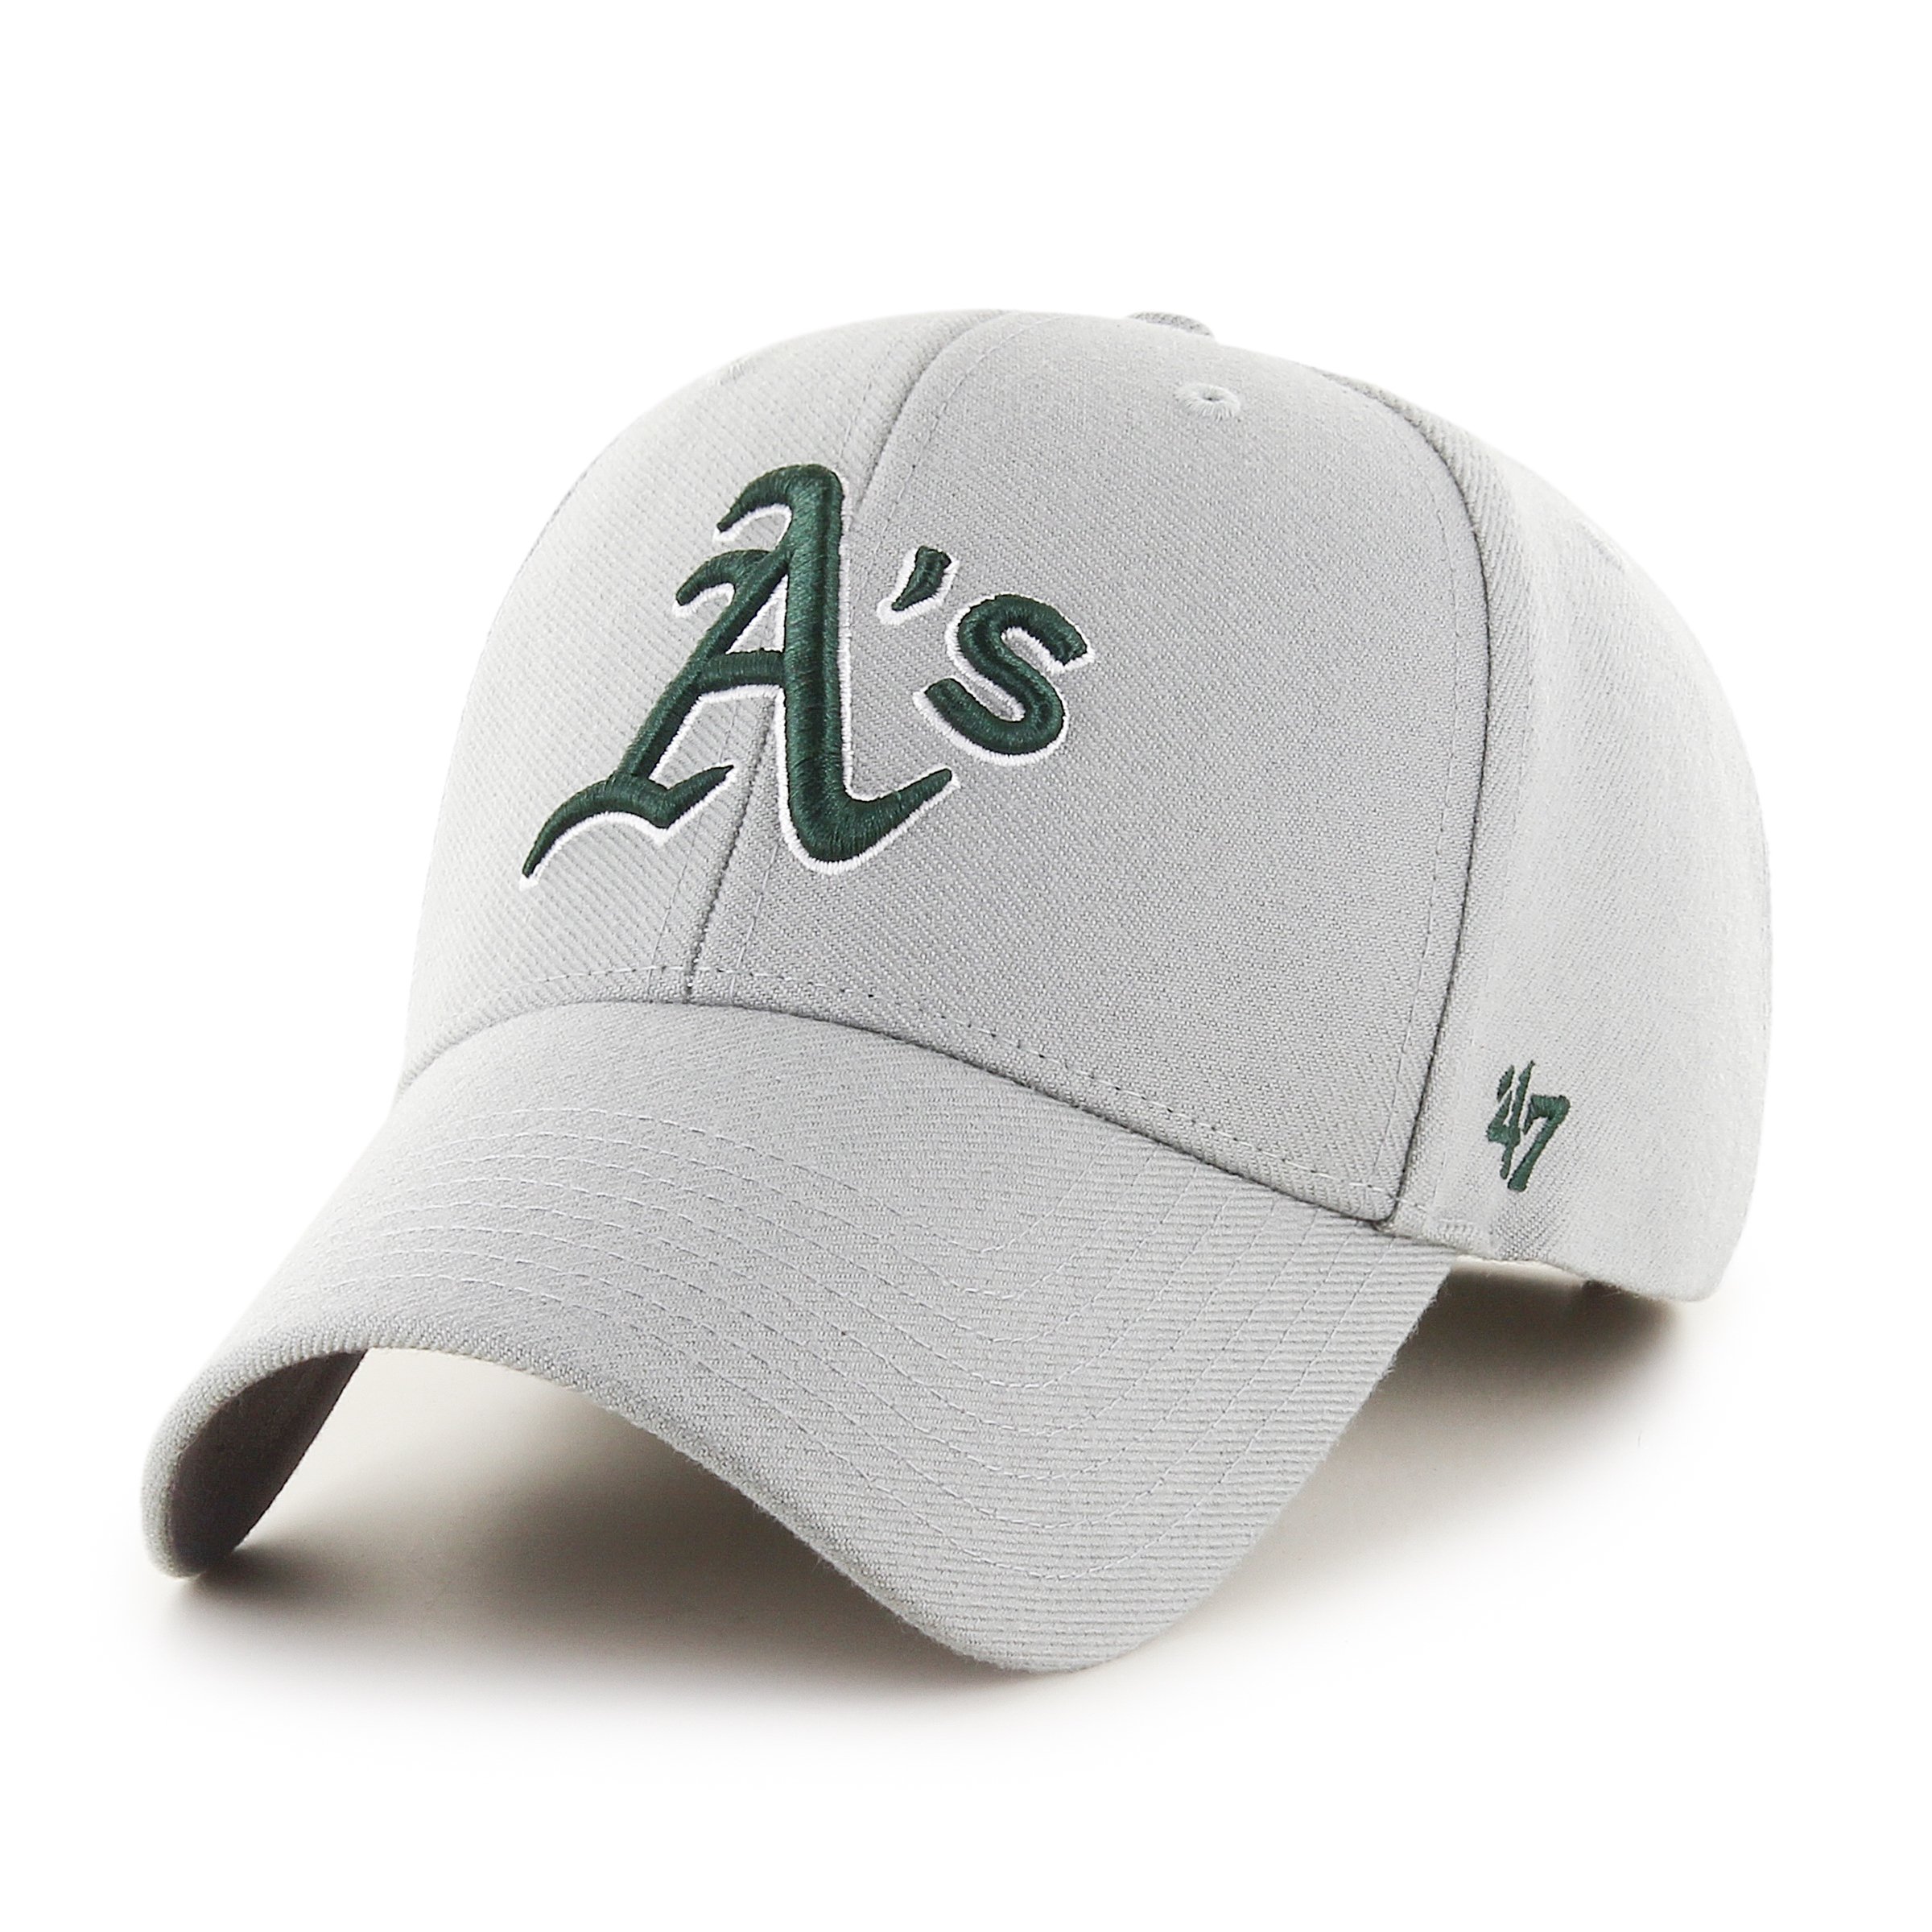 '47 Brand Relaxed Fit Cap - MLB Oakland Athletics grau